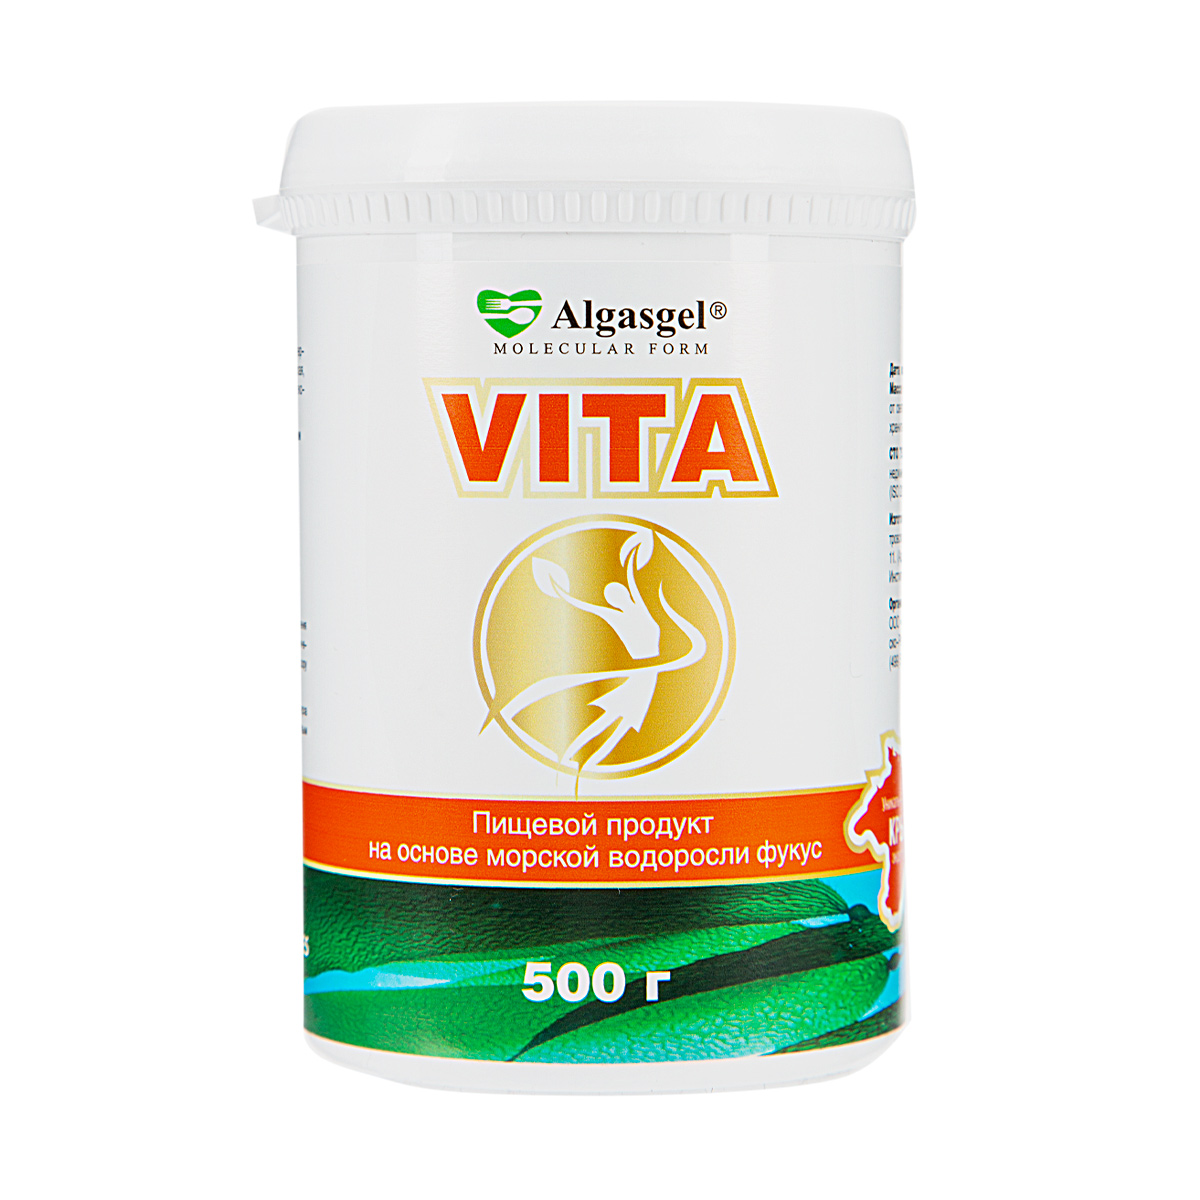 Algasgel Vita для восстановления организма (500 г)